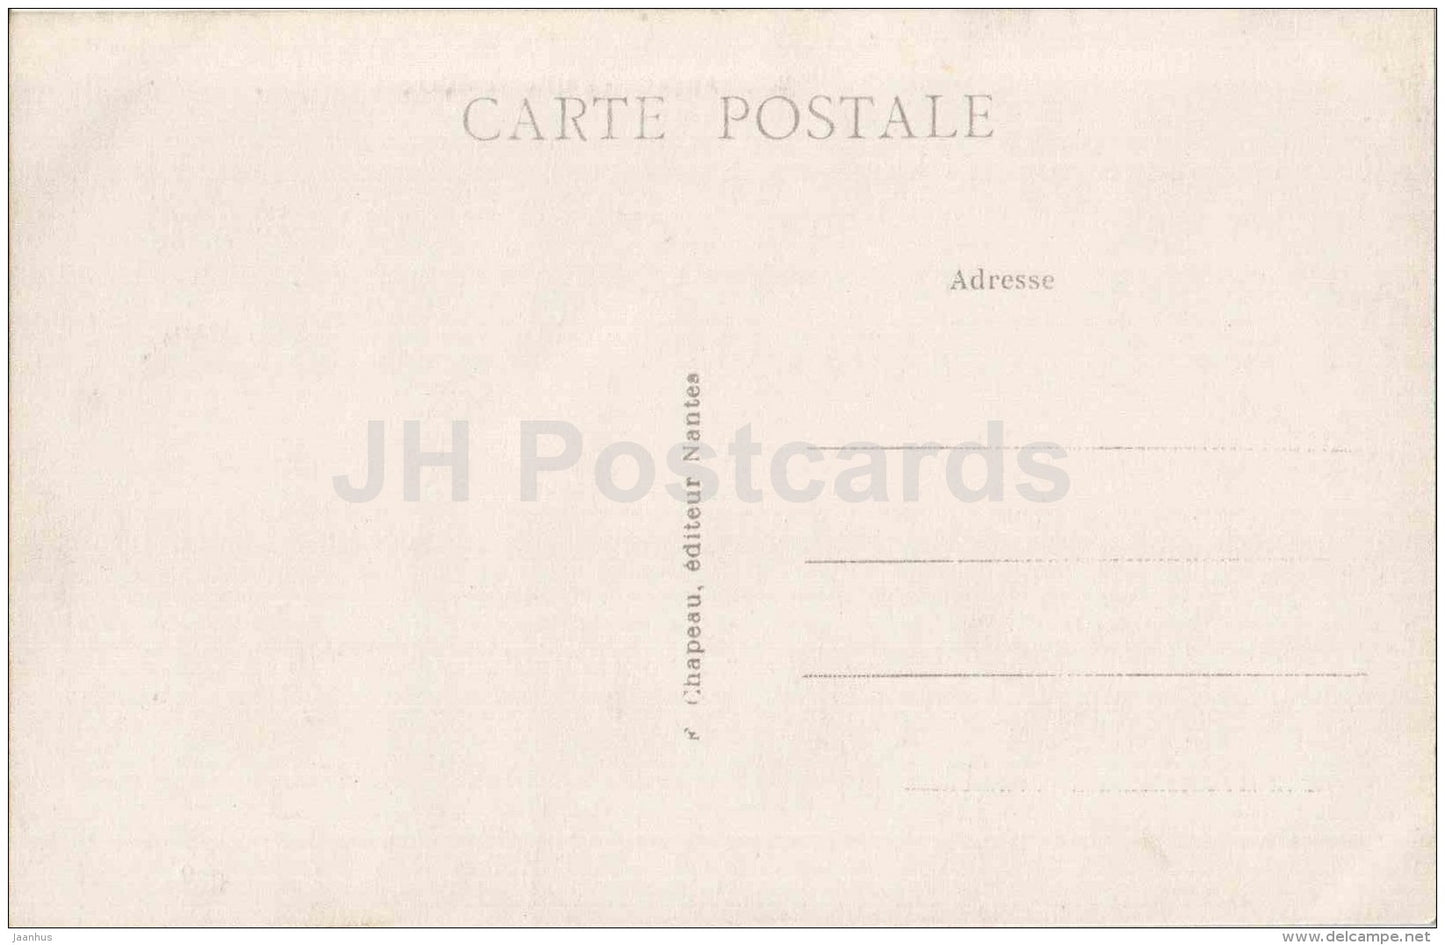 La rue de Gorges - Nantes - France - 253 - Gilbert - old postcard - unused - JH Postcards